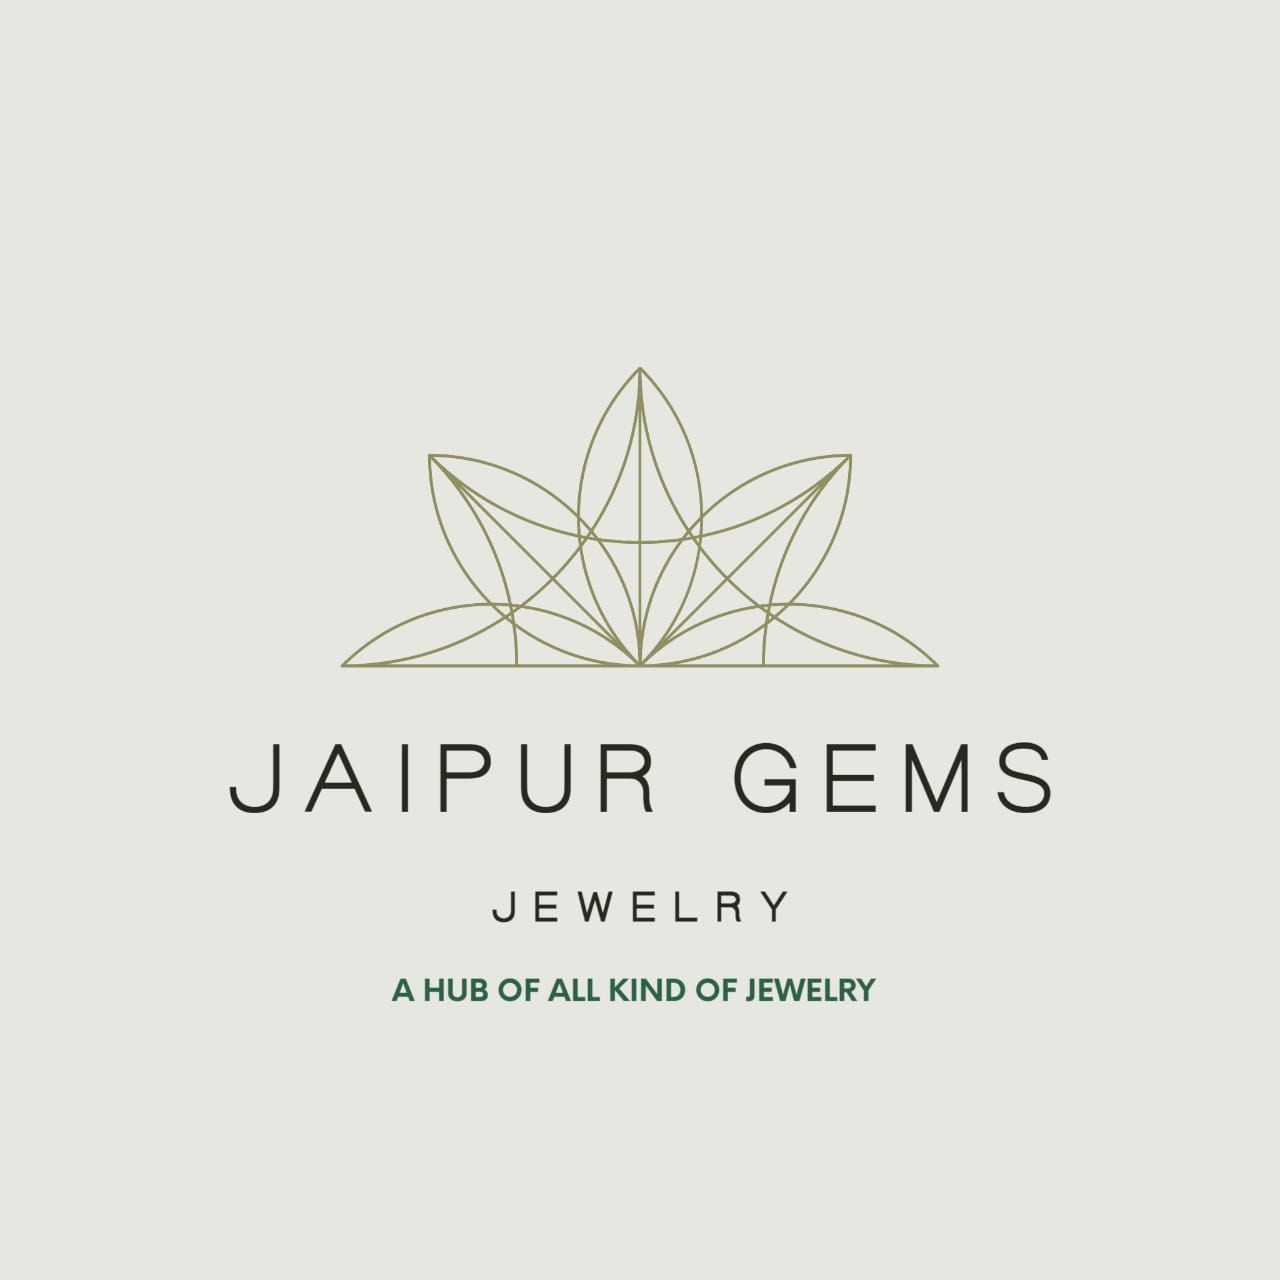 Jaipur Gems Jewelry